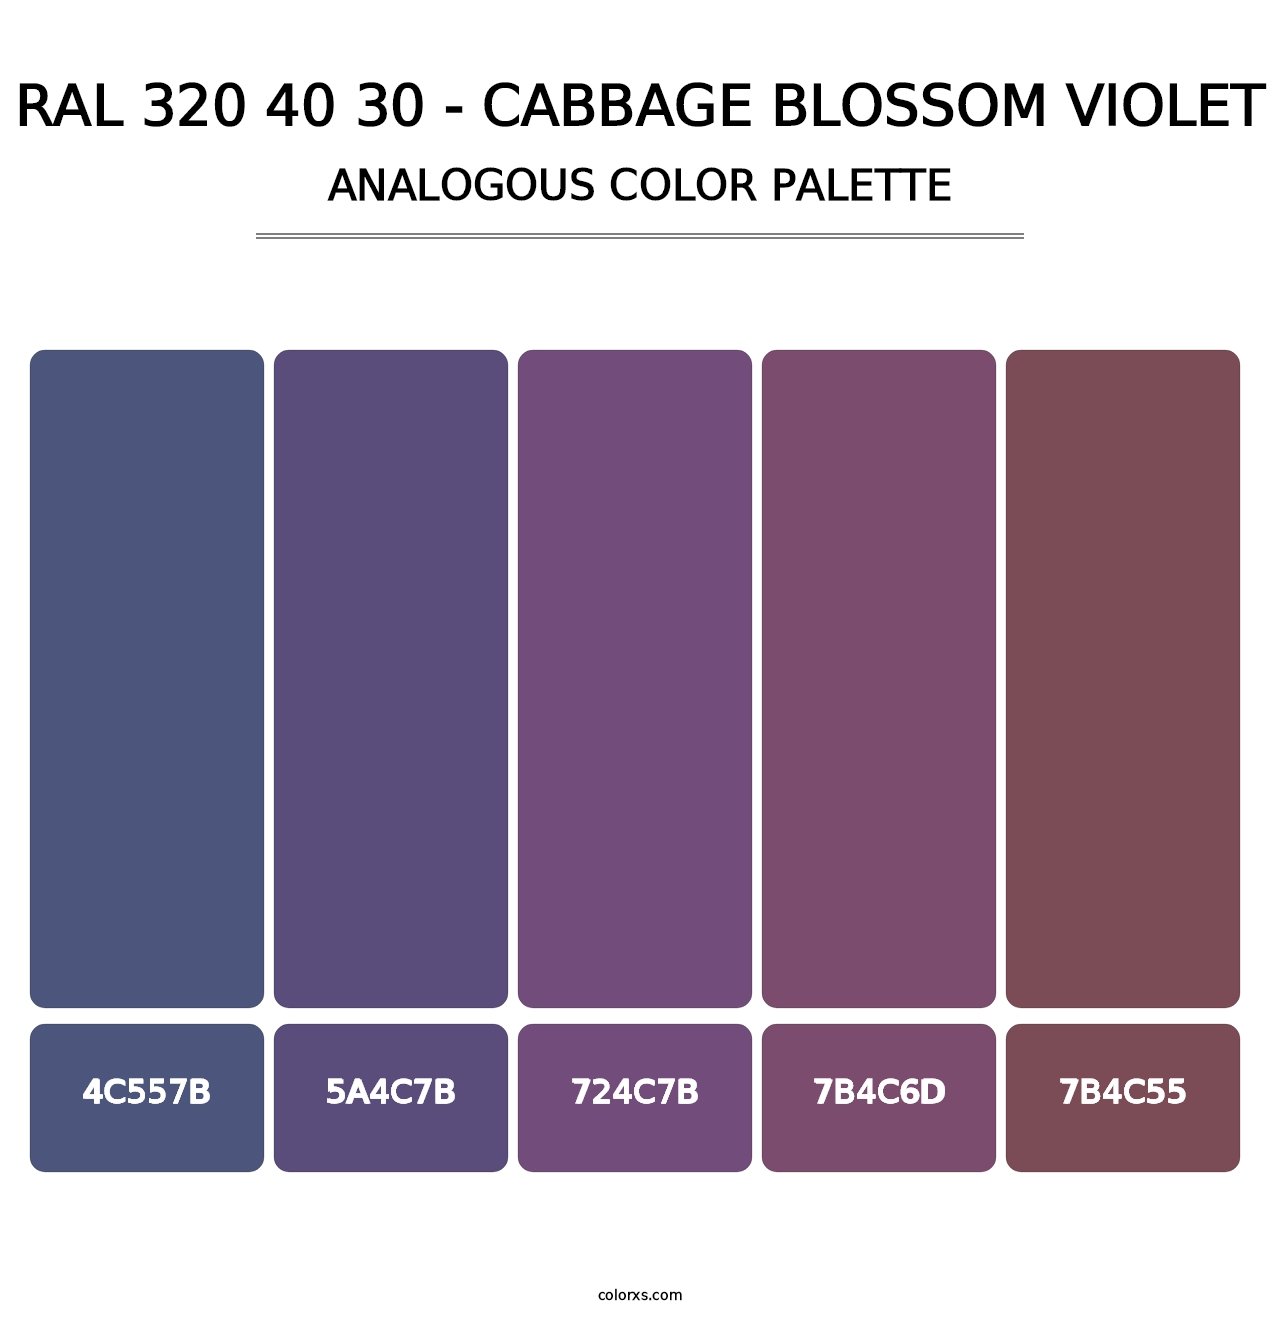 RAL 320 40 30 - Cabbage Blossom Violet - Analogous Color Palette